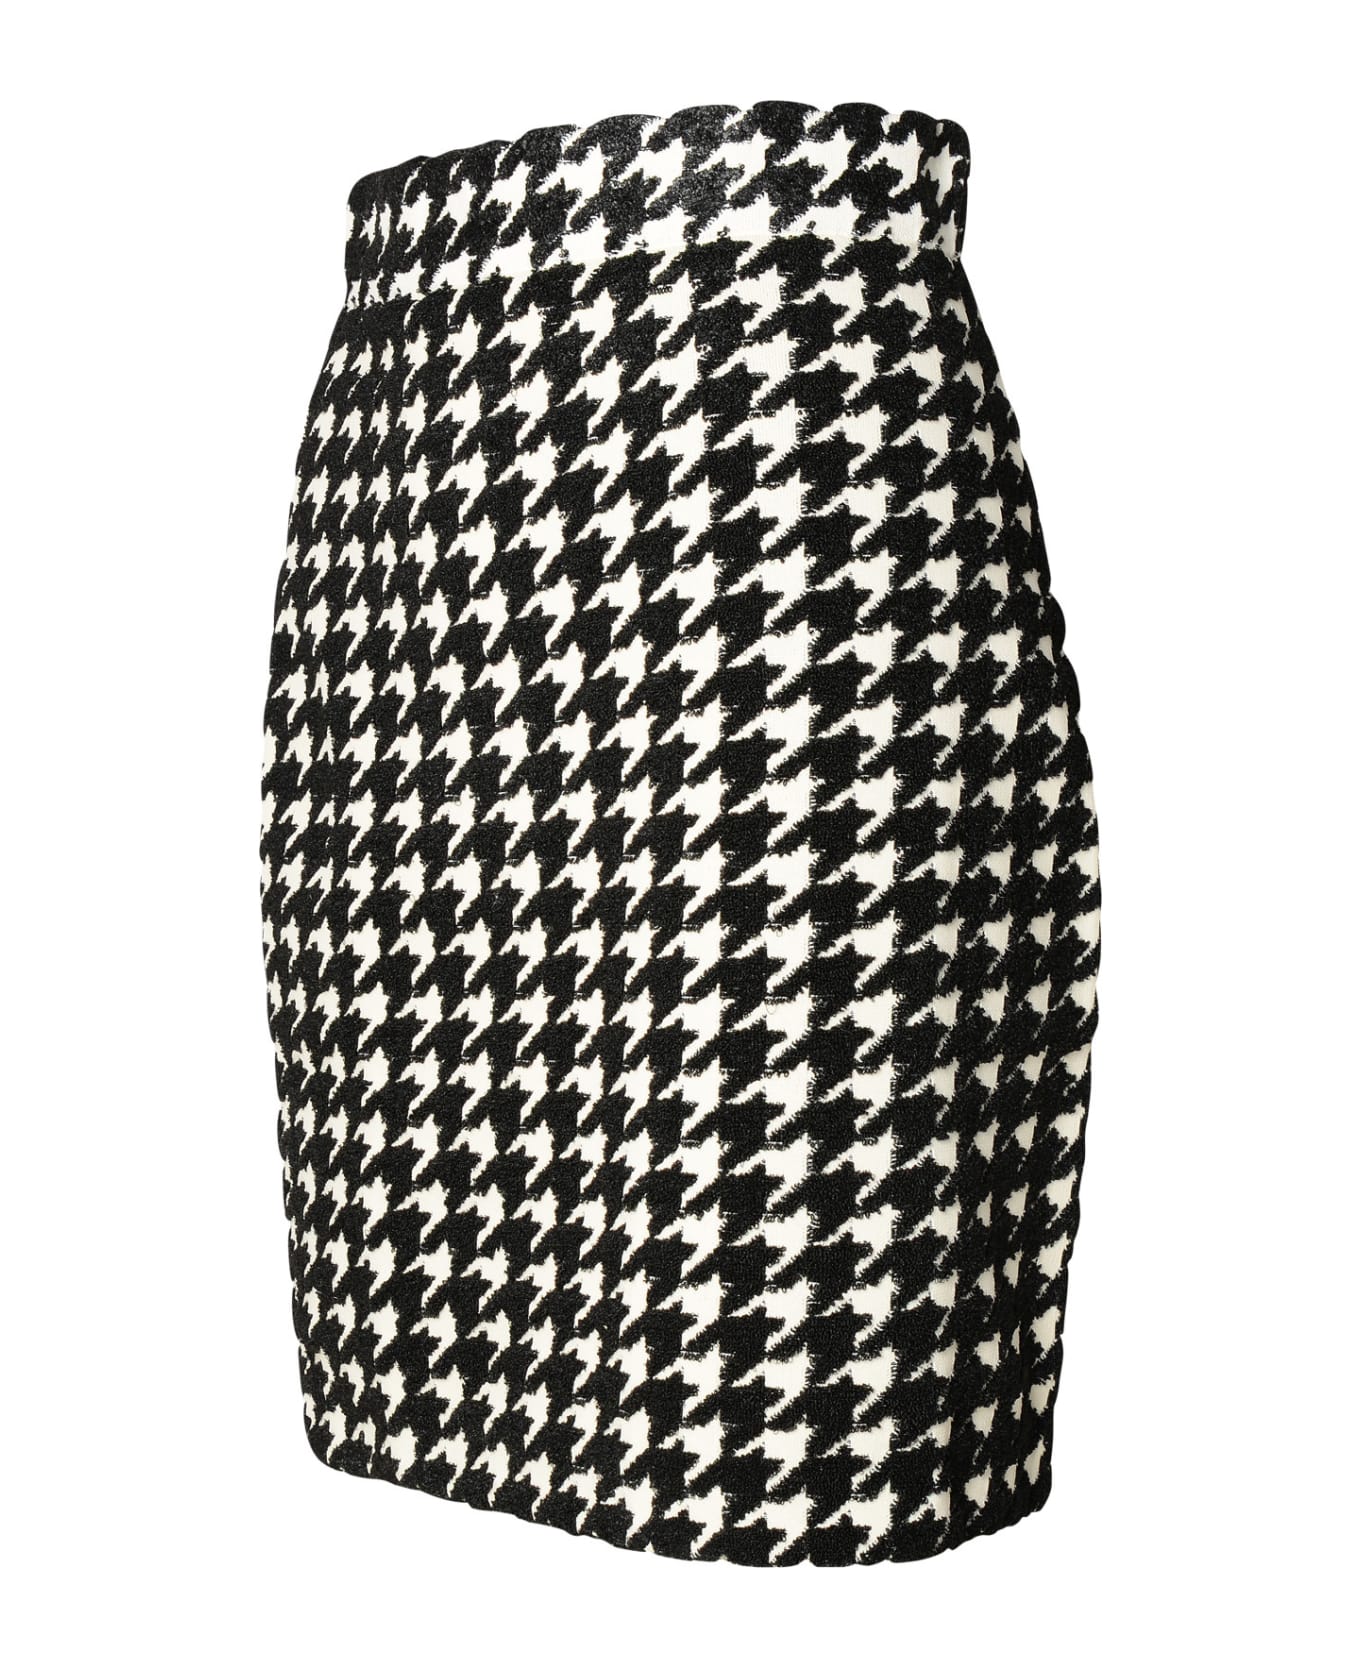 Burberry Black Viscose Blend Skirt - Multicolor スカート